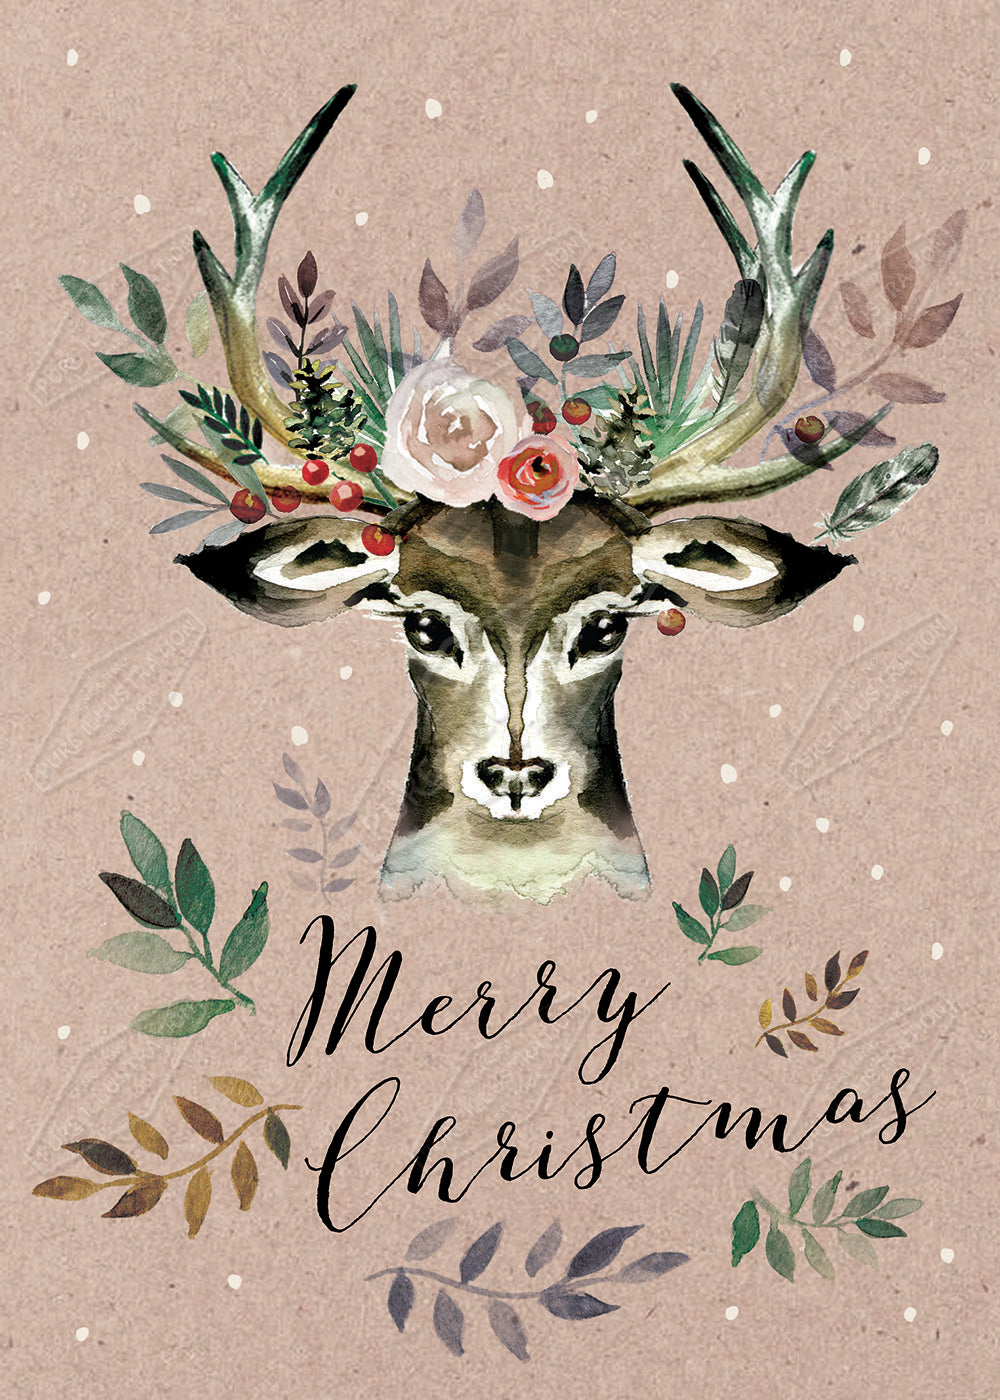 00029441DEV - Deva Evans is represented by Pure Art Licensing Agency - Christmas Greeting Card Design